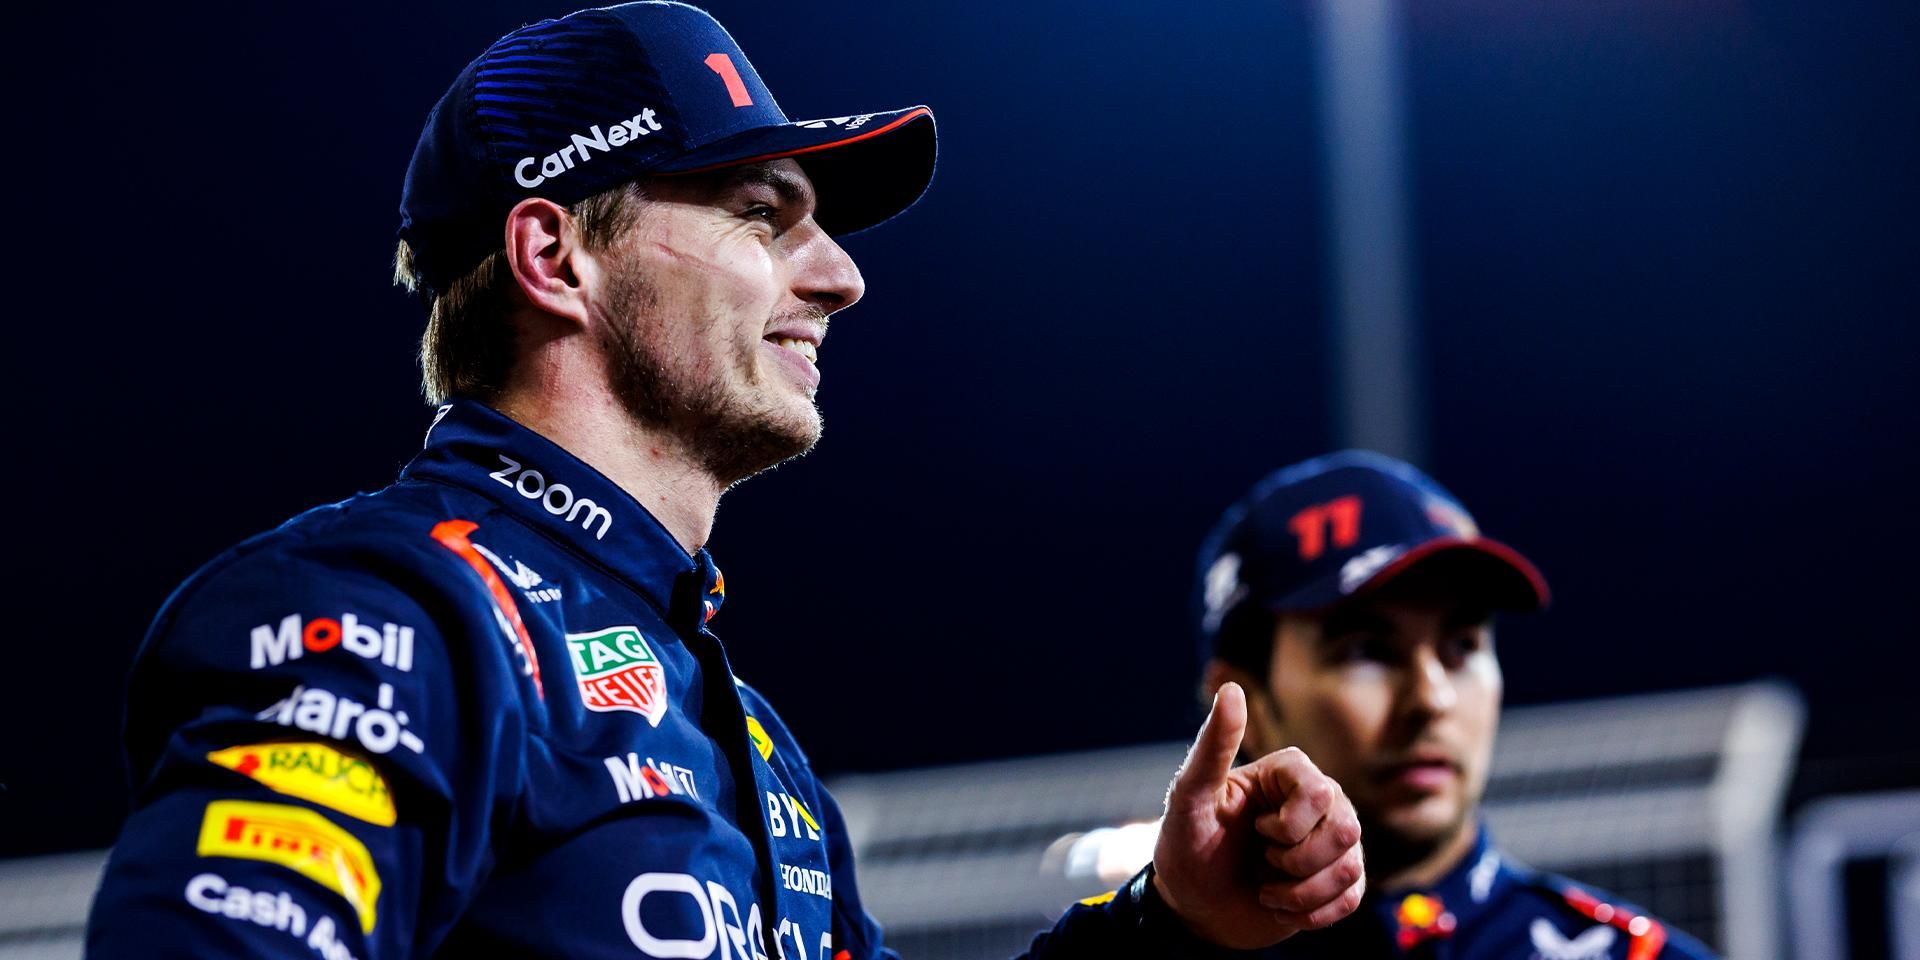 Resultados do TL2: Verstappen mais rápido, Bottas surpreende